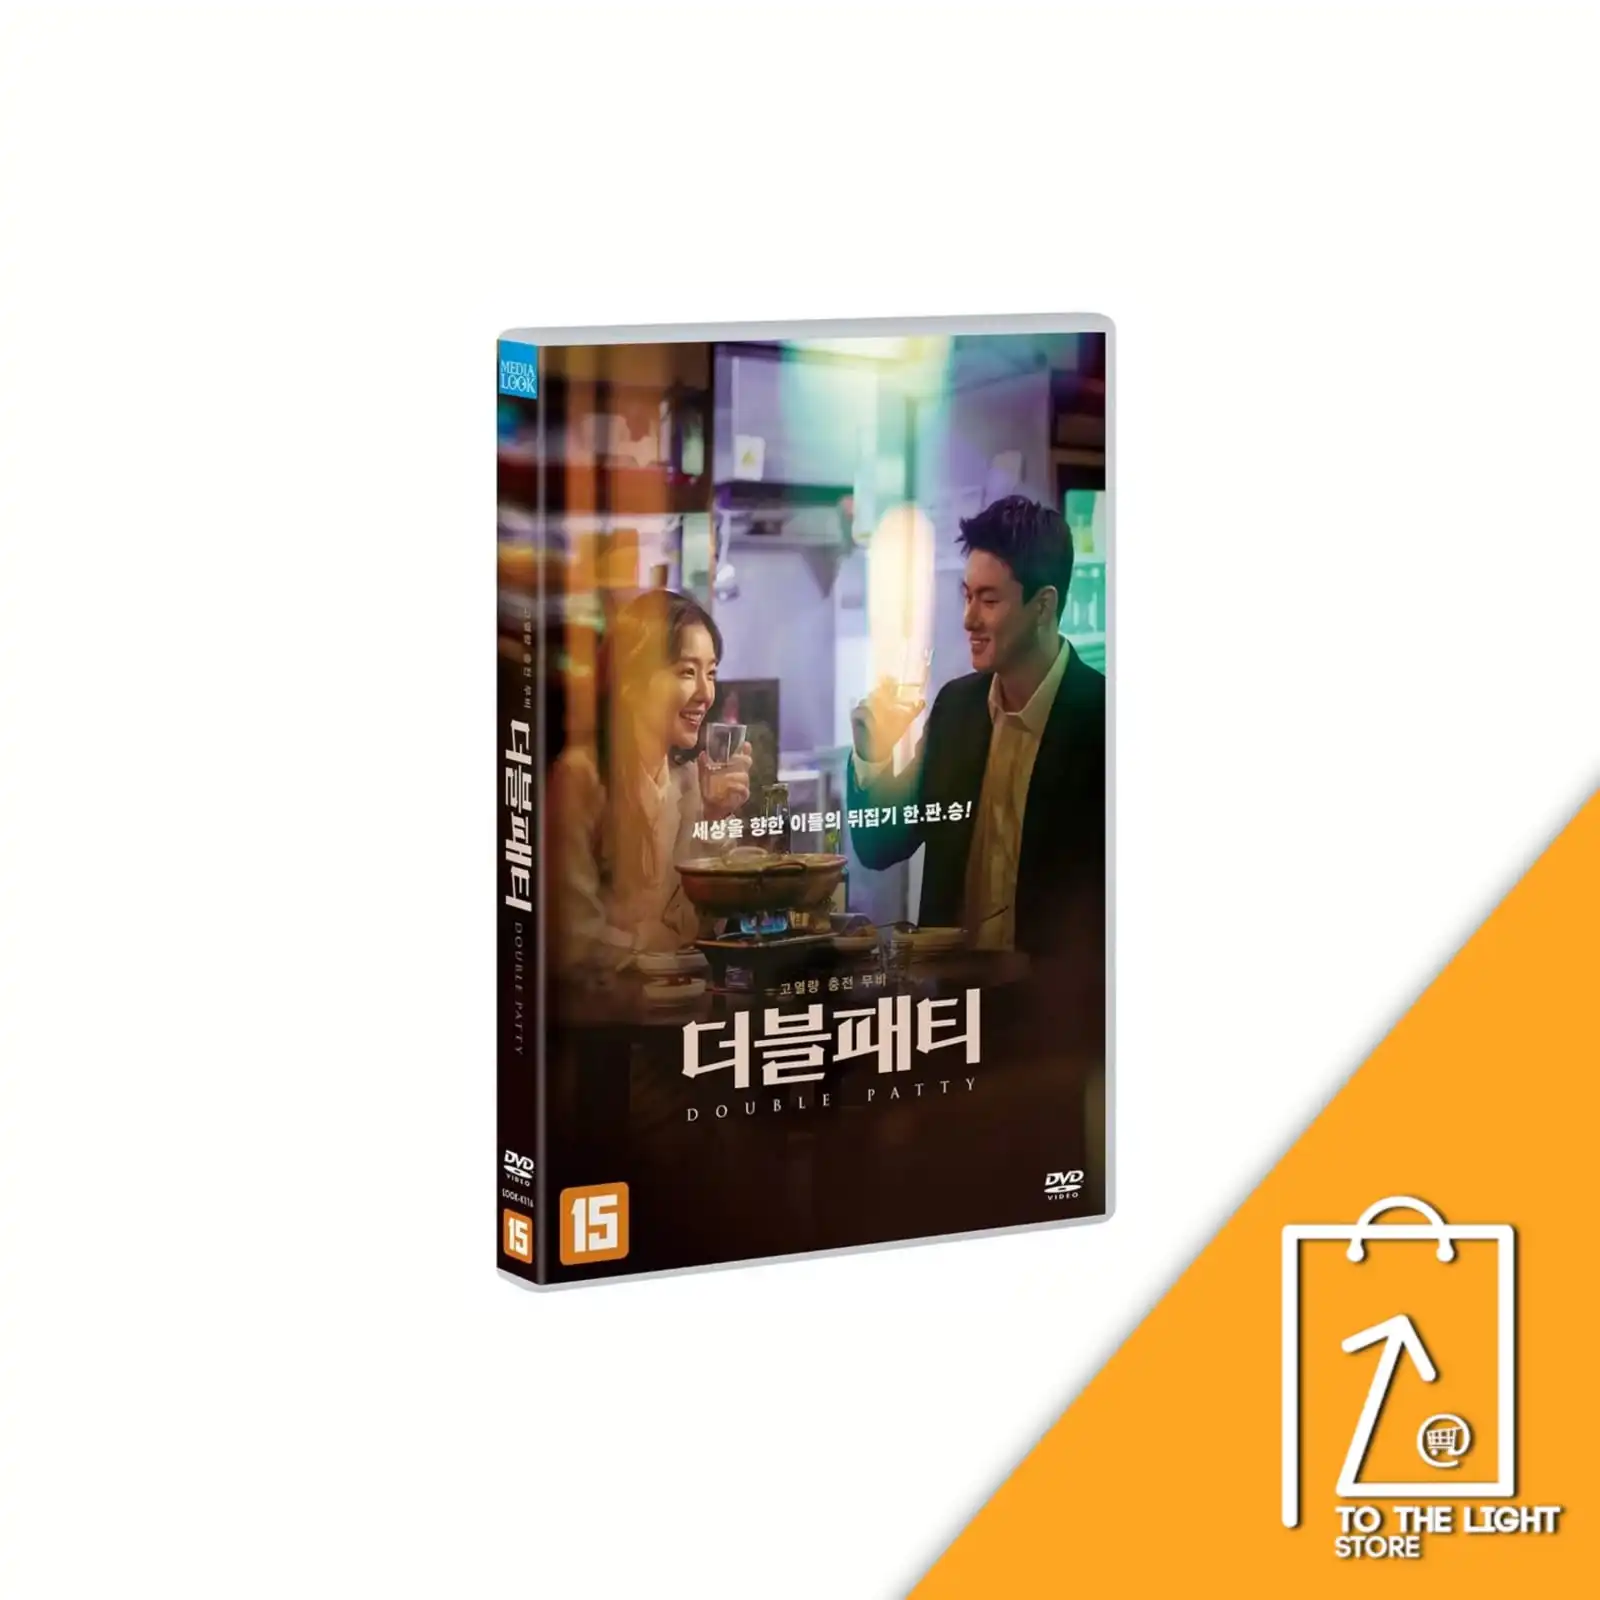 *Double Patty DVD (Korea Version)*